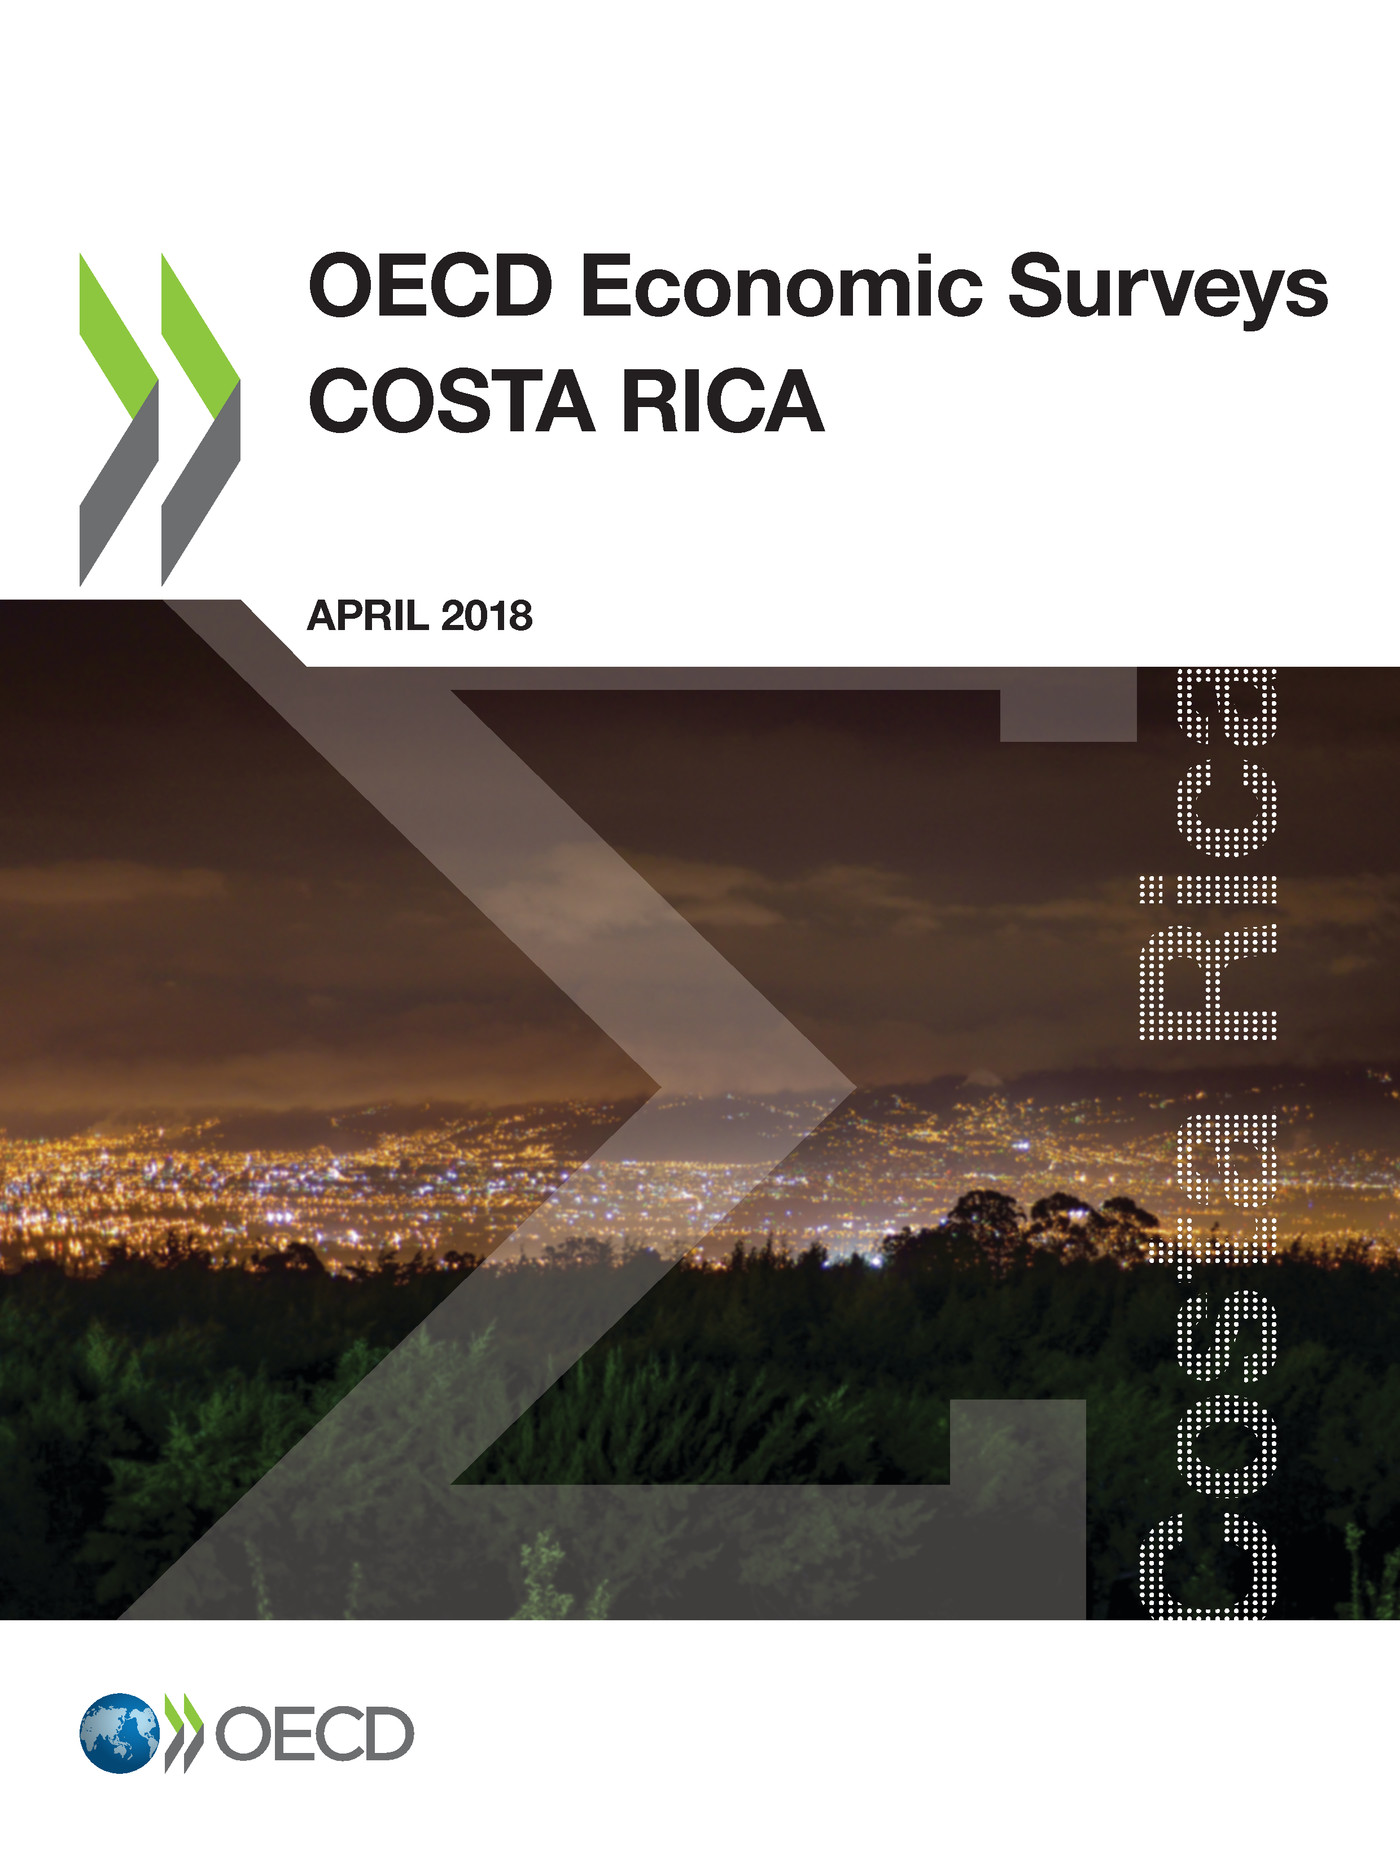 OECD Economic Surveys: Costa Rica 2018 -  Collectif - OCDE / OECD